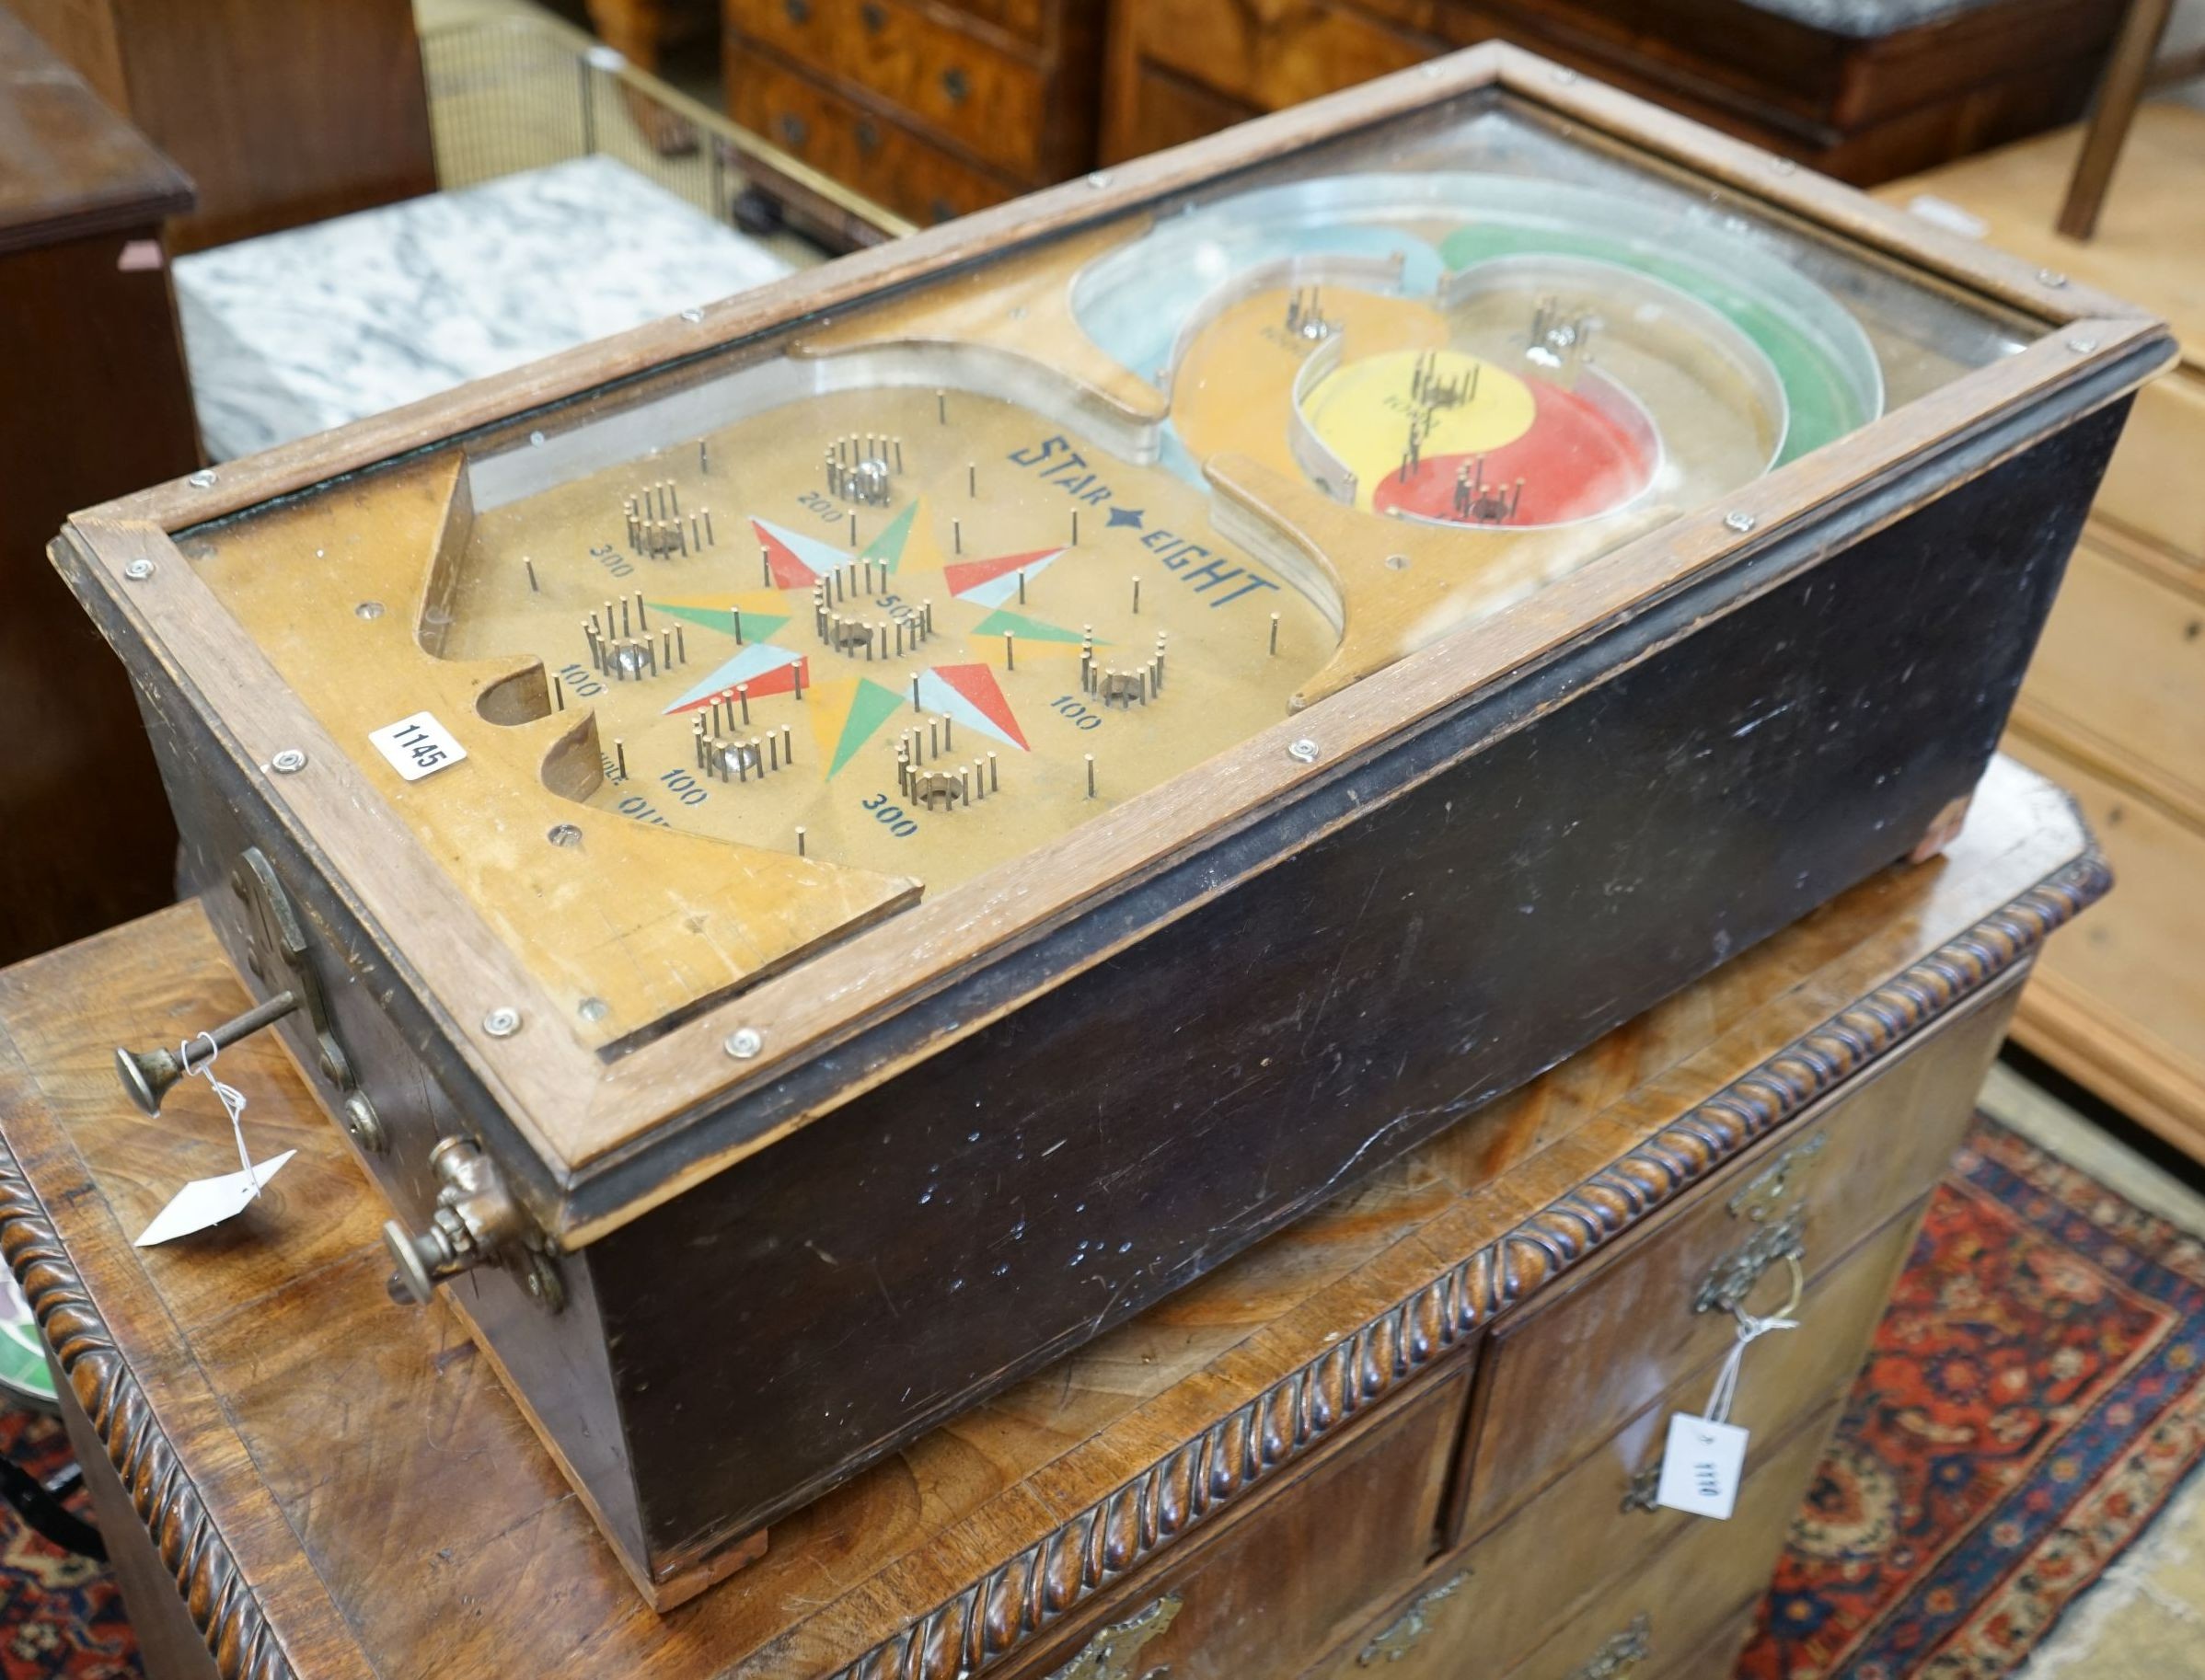 A Vintage Star Eight table top pinball machine, width 42cm depth 69cm height 29cm